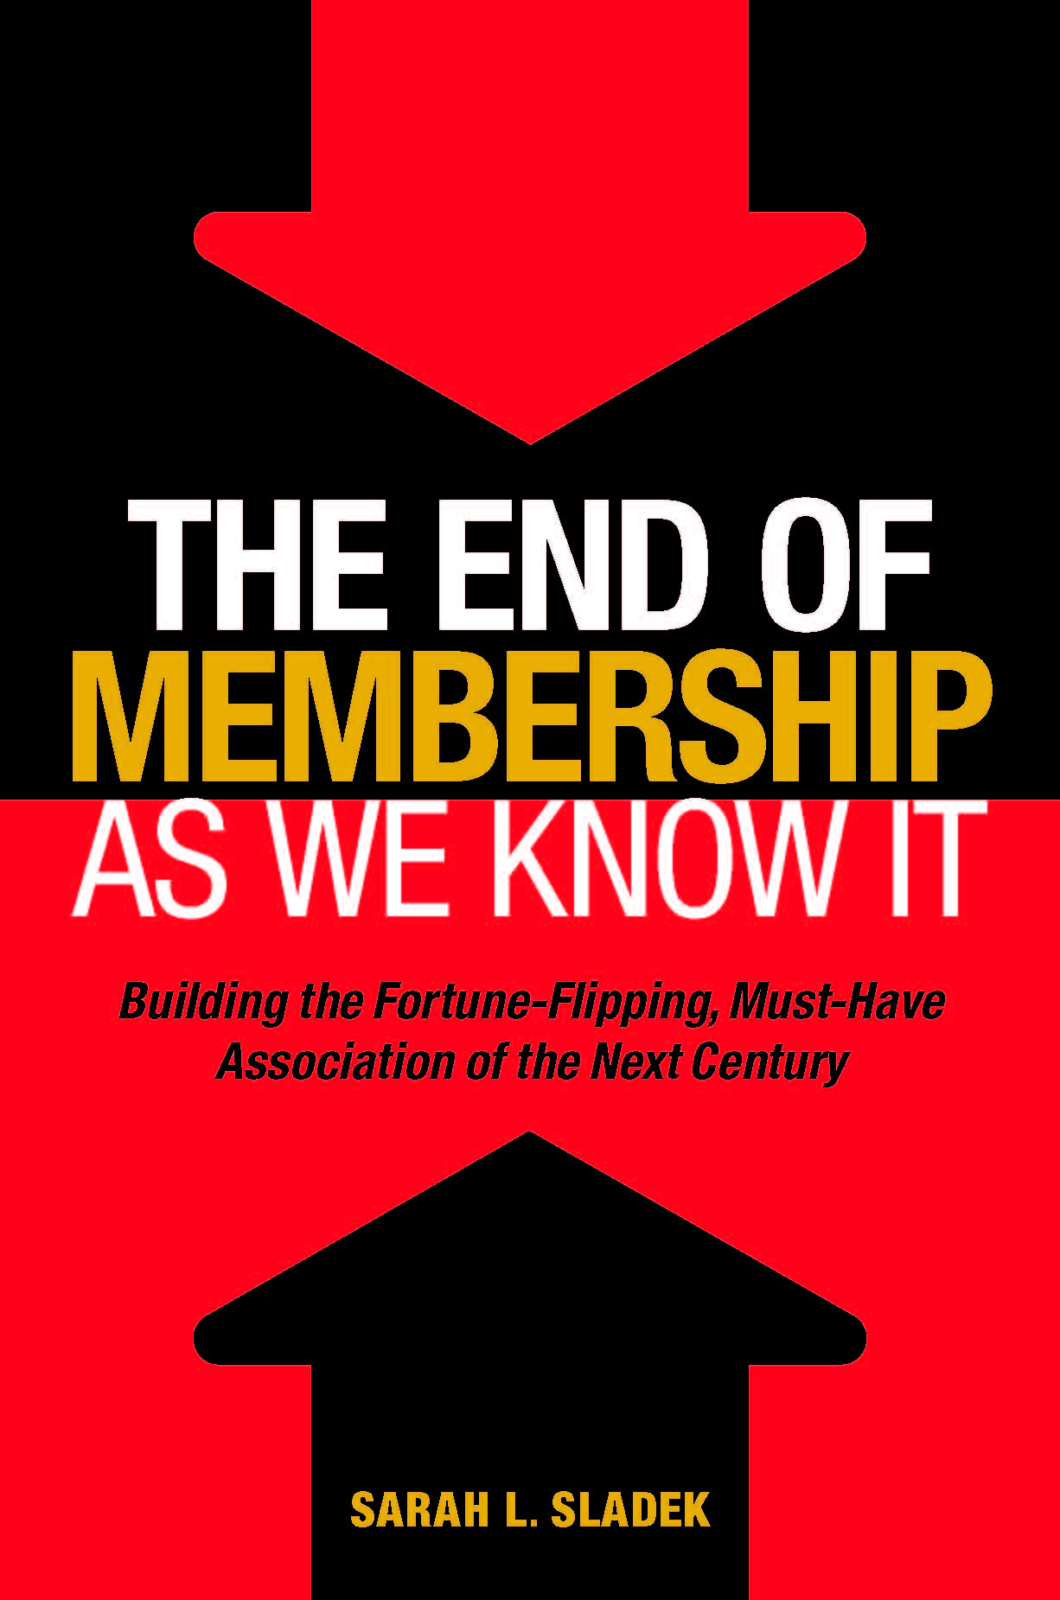 The End of Membership as We Know It, Sarah Sladek, Author